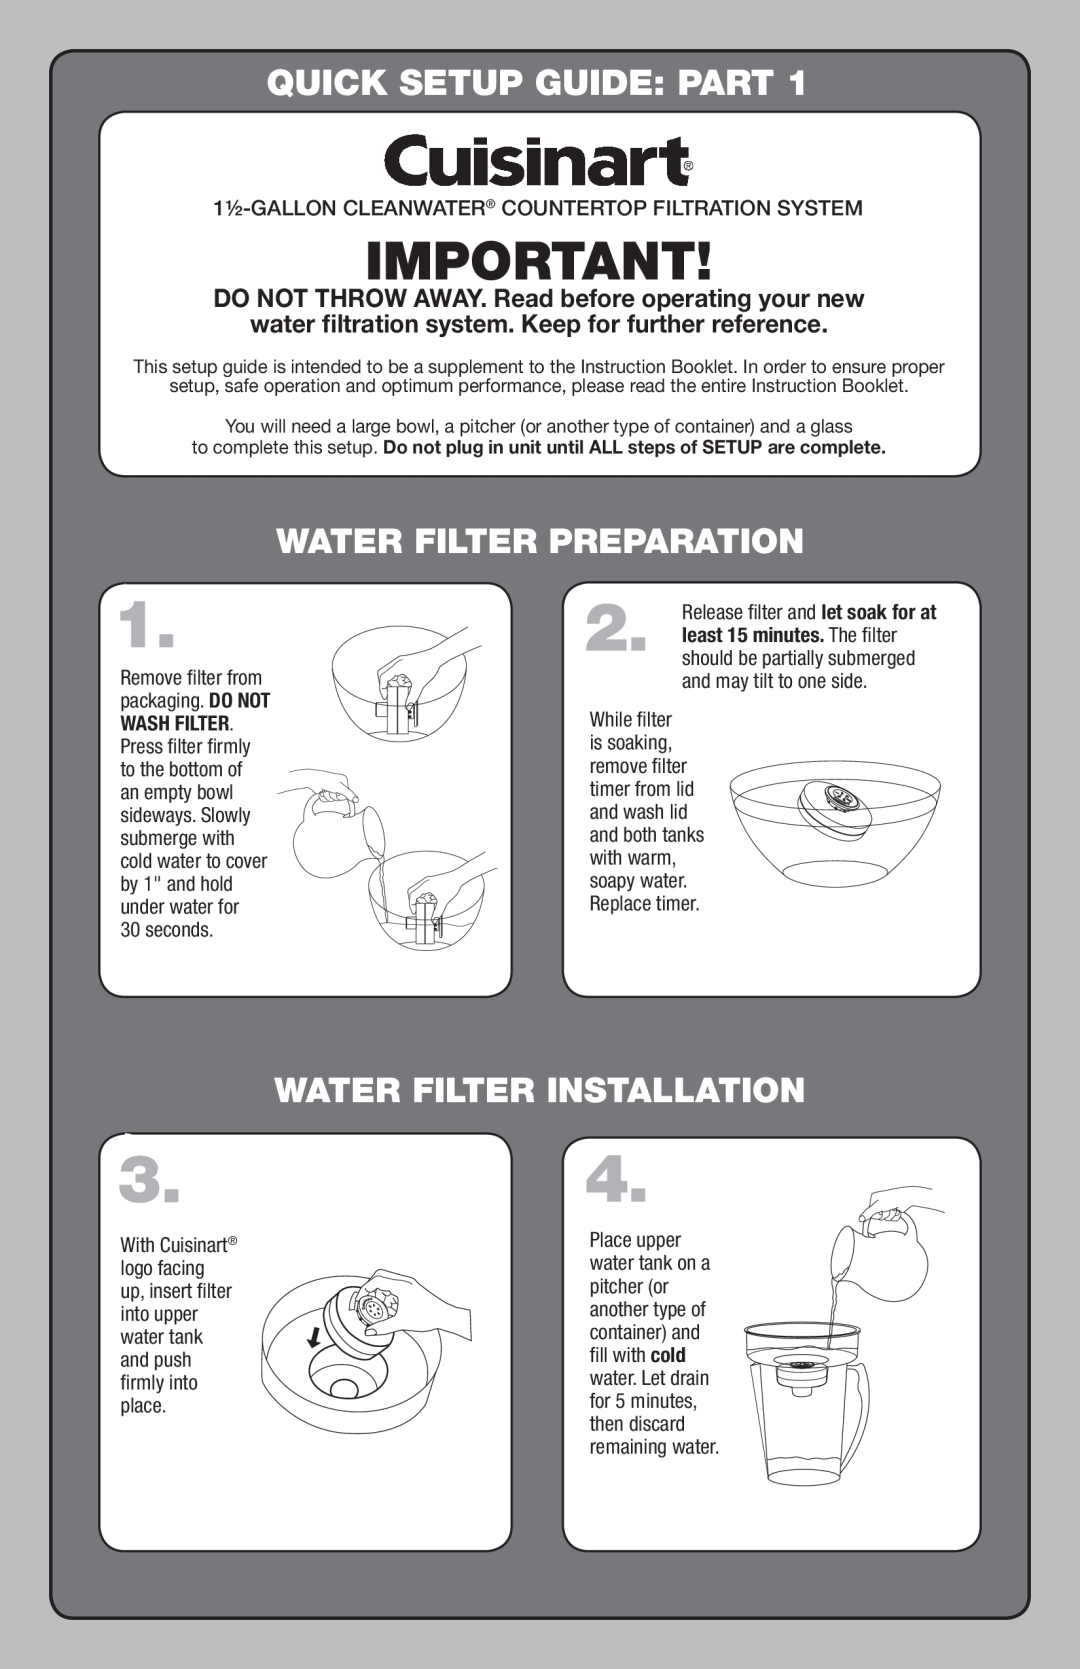 Cuisinart PG-24576 setup guide Quick Setup Guide Part, Water Filter Preparation, Water Filter Installation 